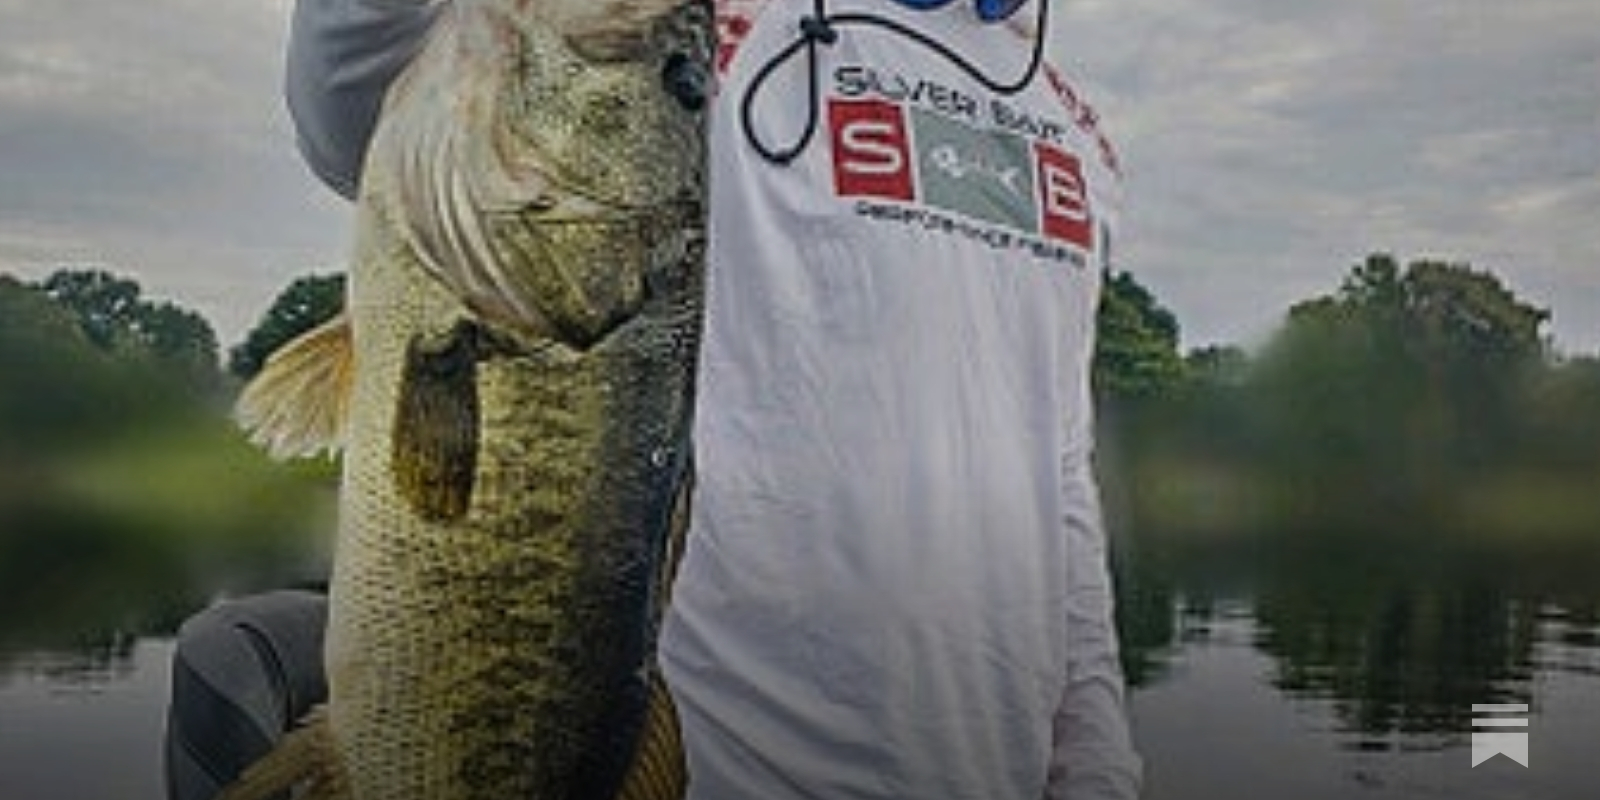 Heat doesn't hurt central Florida bass fishing